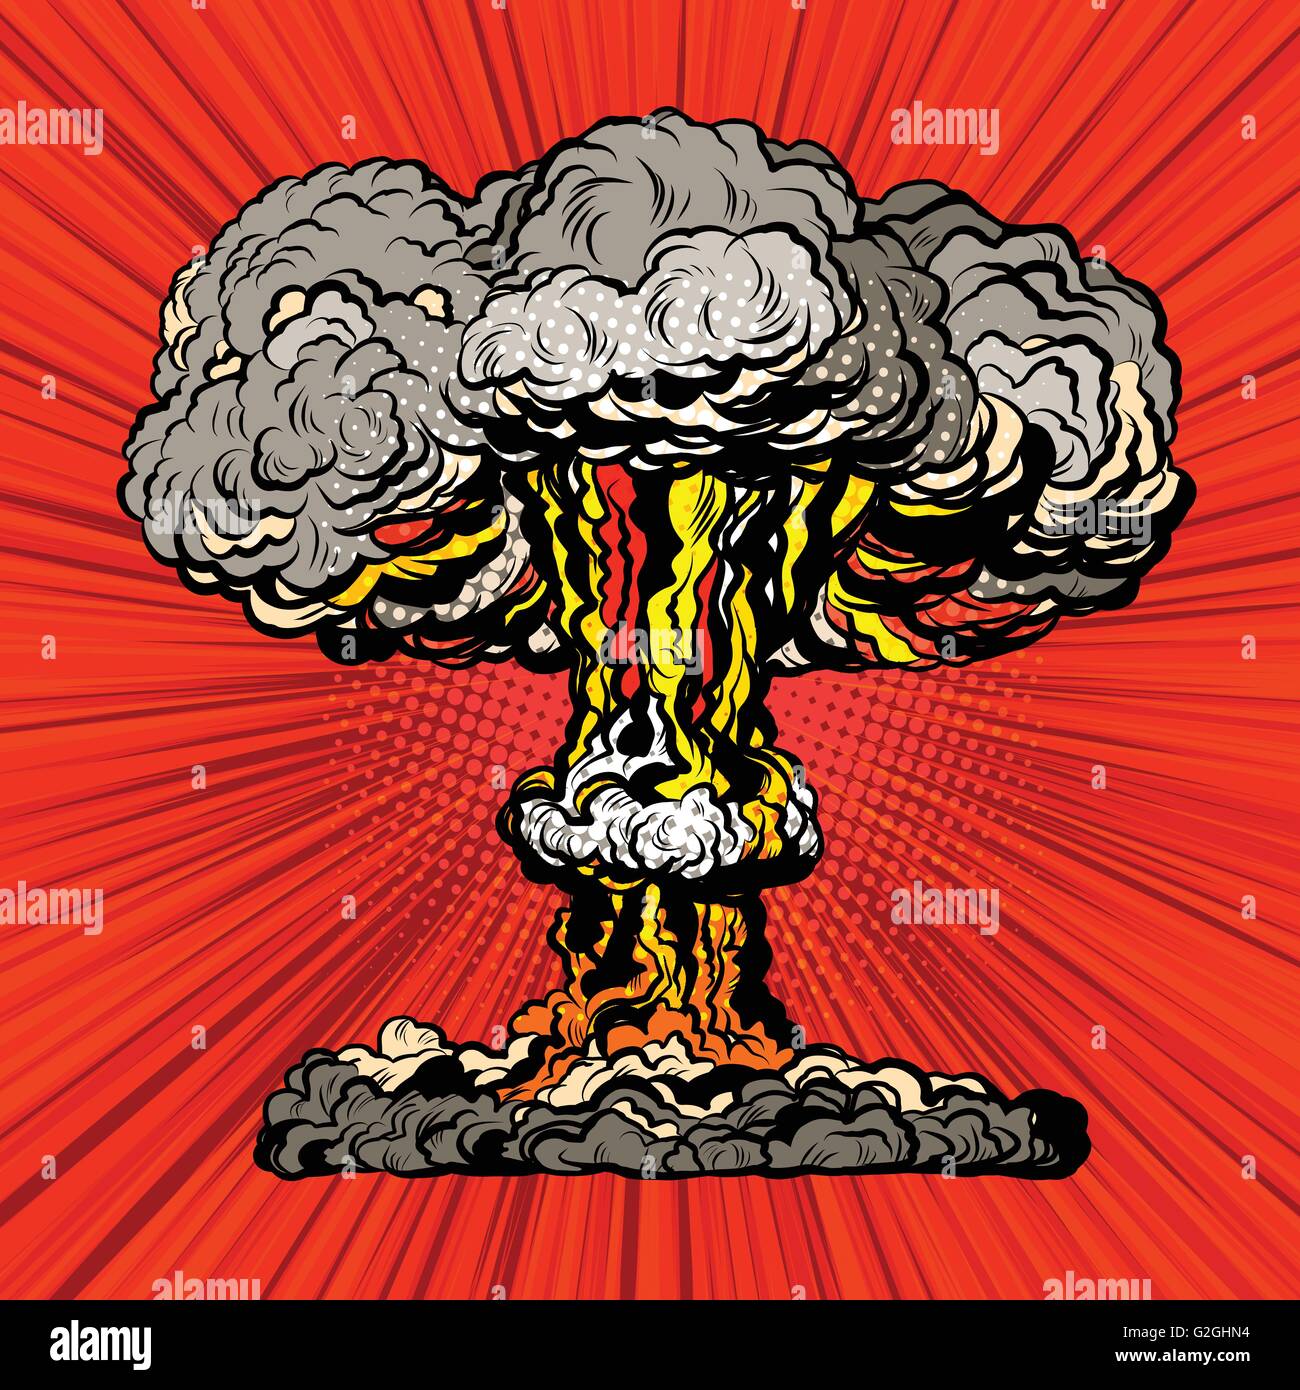 Nuclear explosion radioactive mushroom pop art Stock Vector